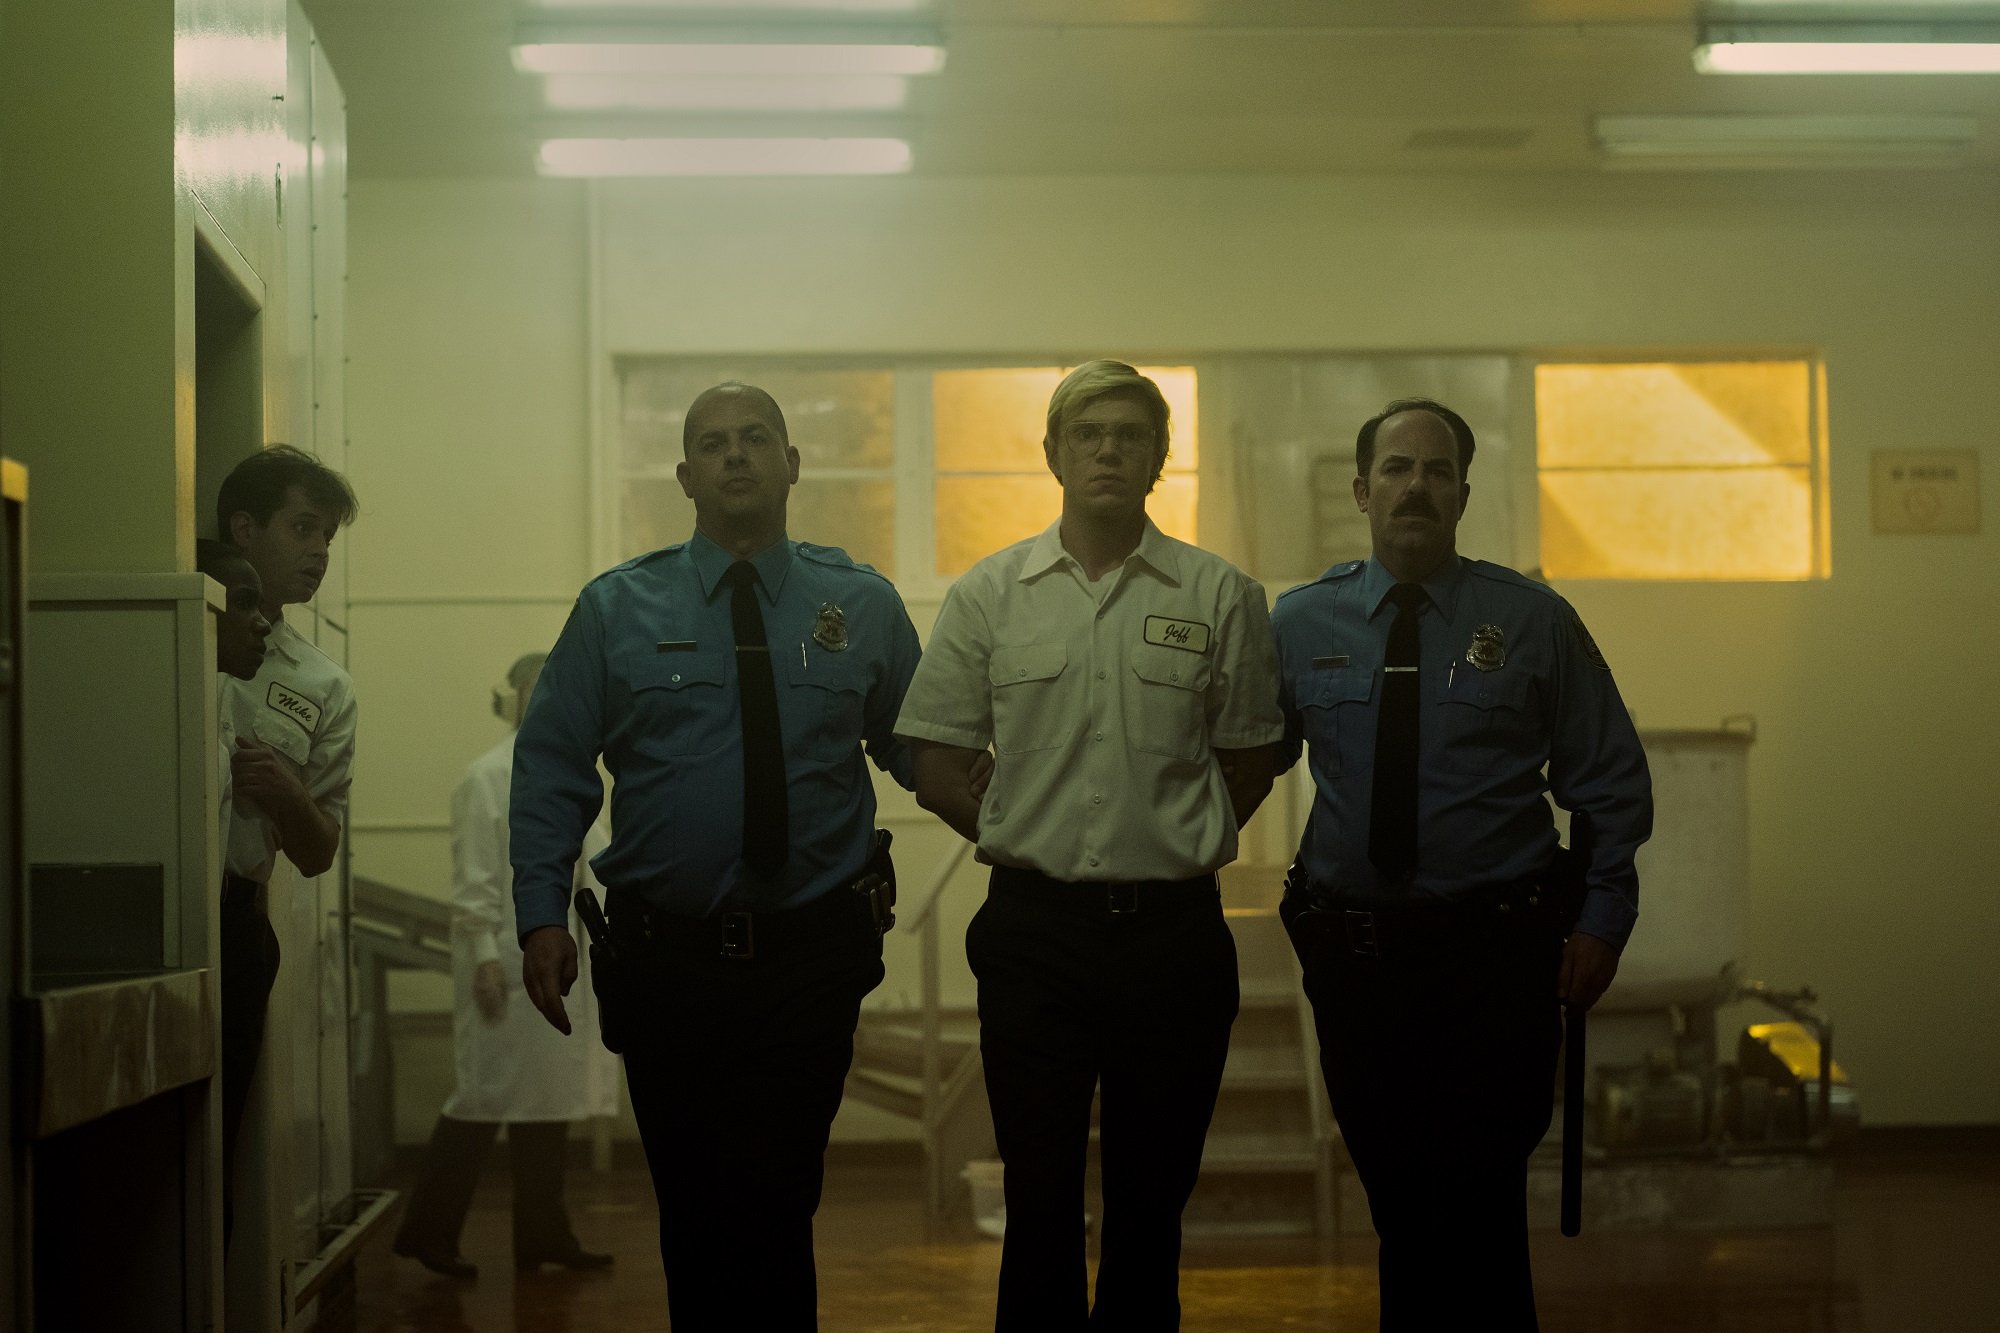 'Dahmer — Monster: The Jeffrey Dahmer Story': Mark Weiler as Officer, Evan Peters as Jeffrey Dahmer walking together